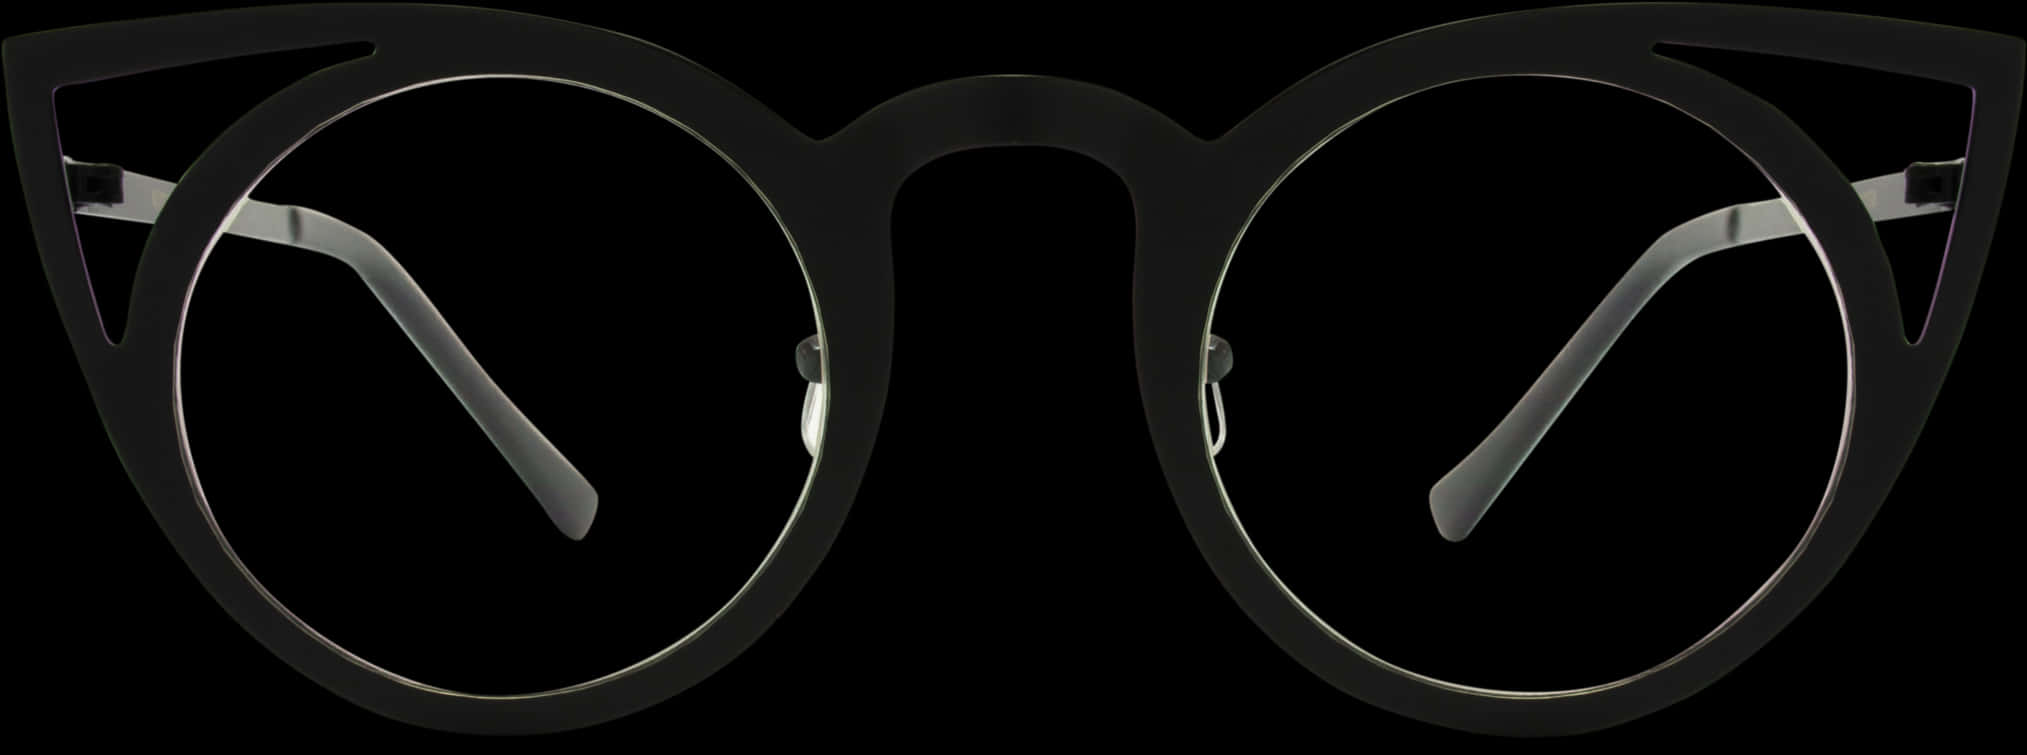 Black Round Glasses Transparent Background